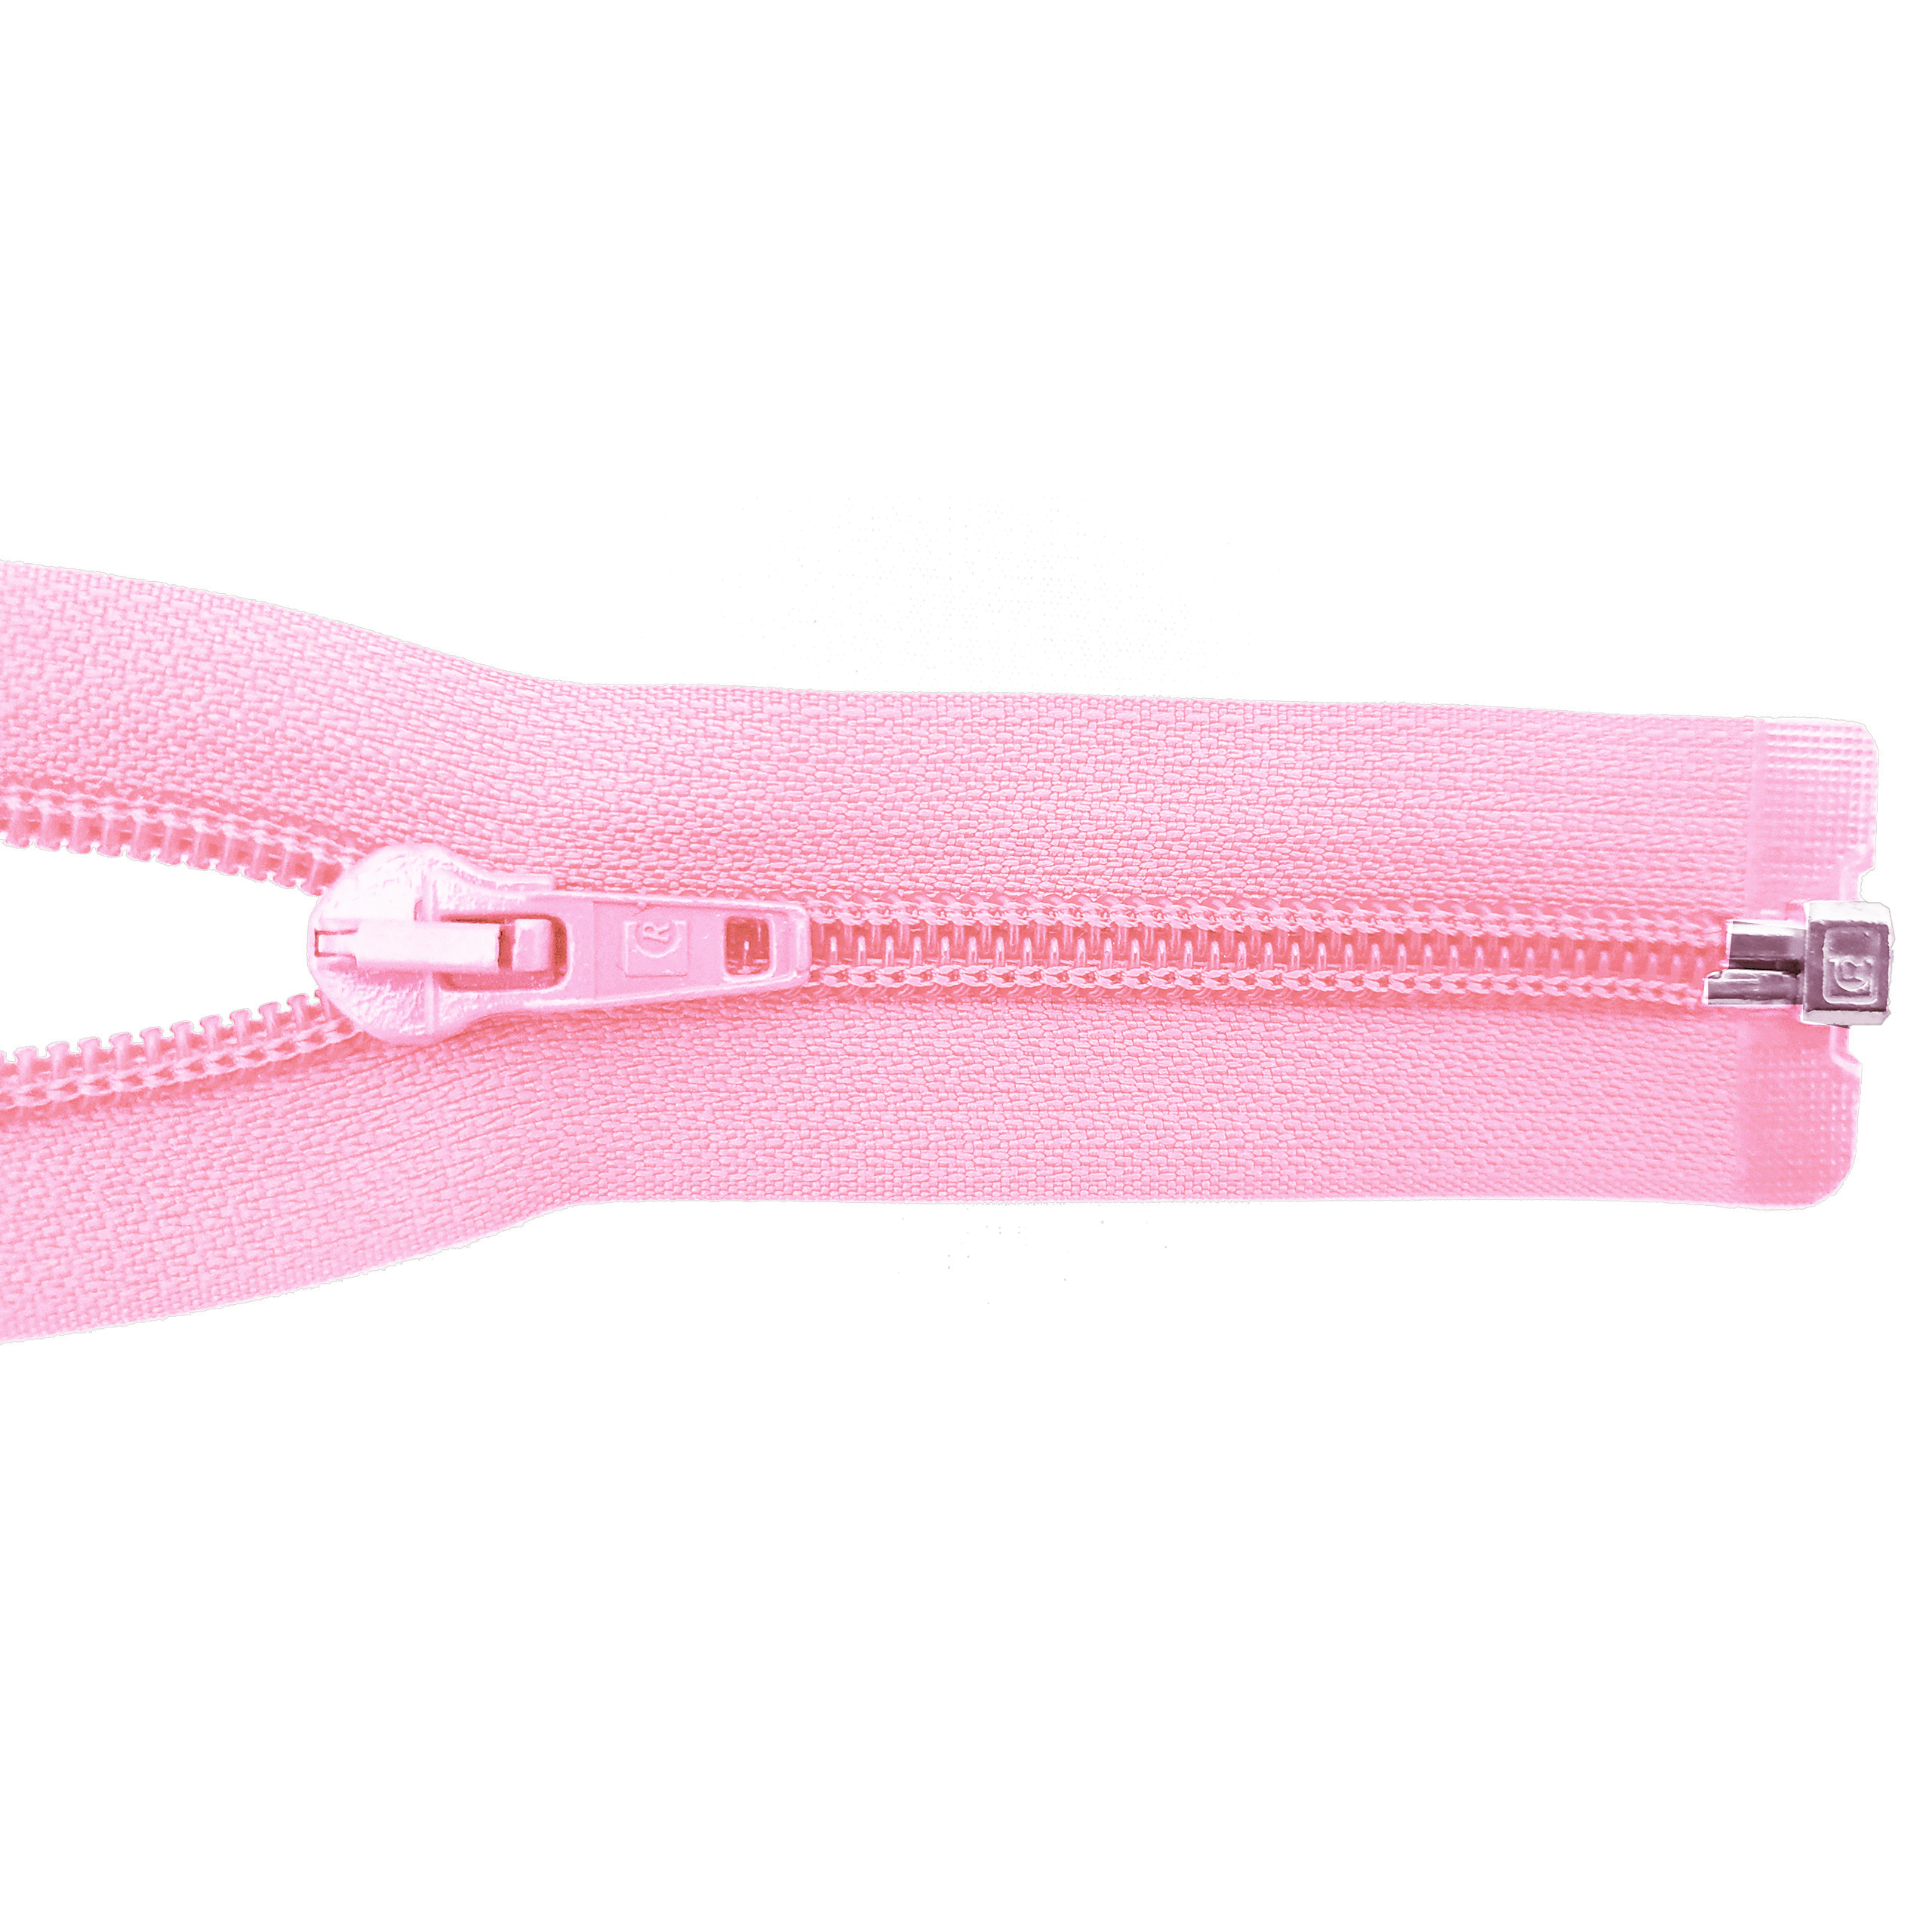 zipper 100cm,divisible, PES spiral, wide, light pink